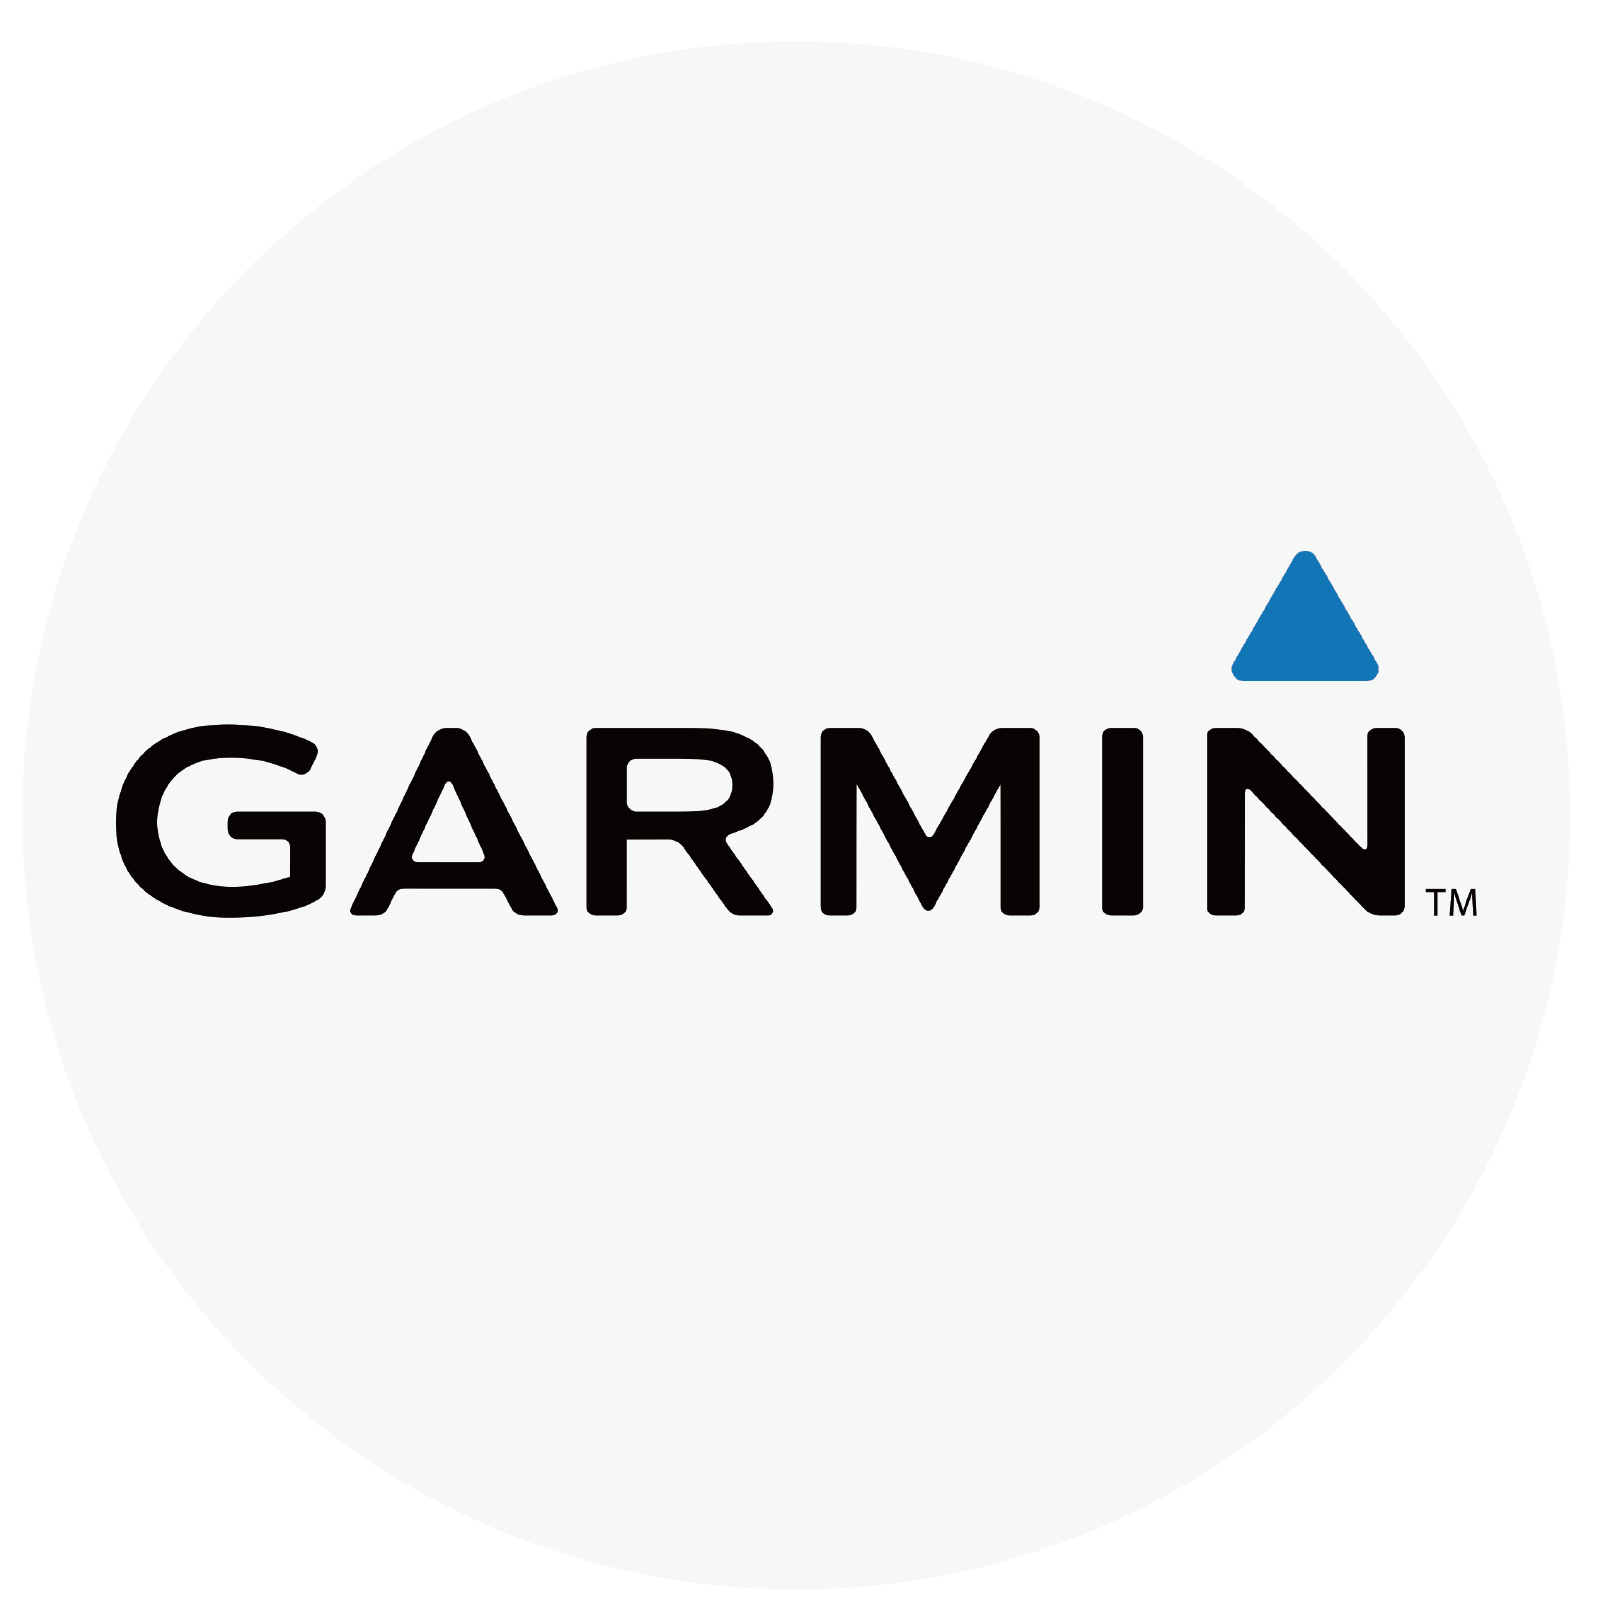 GARMIN_工作區域 1